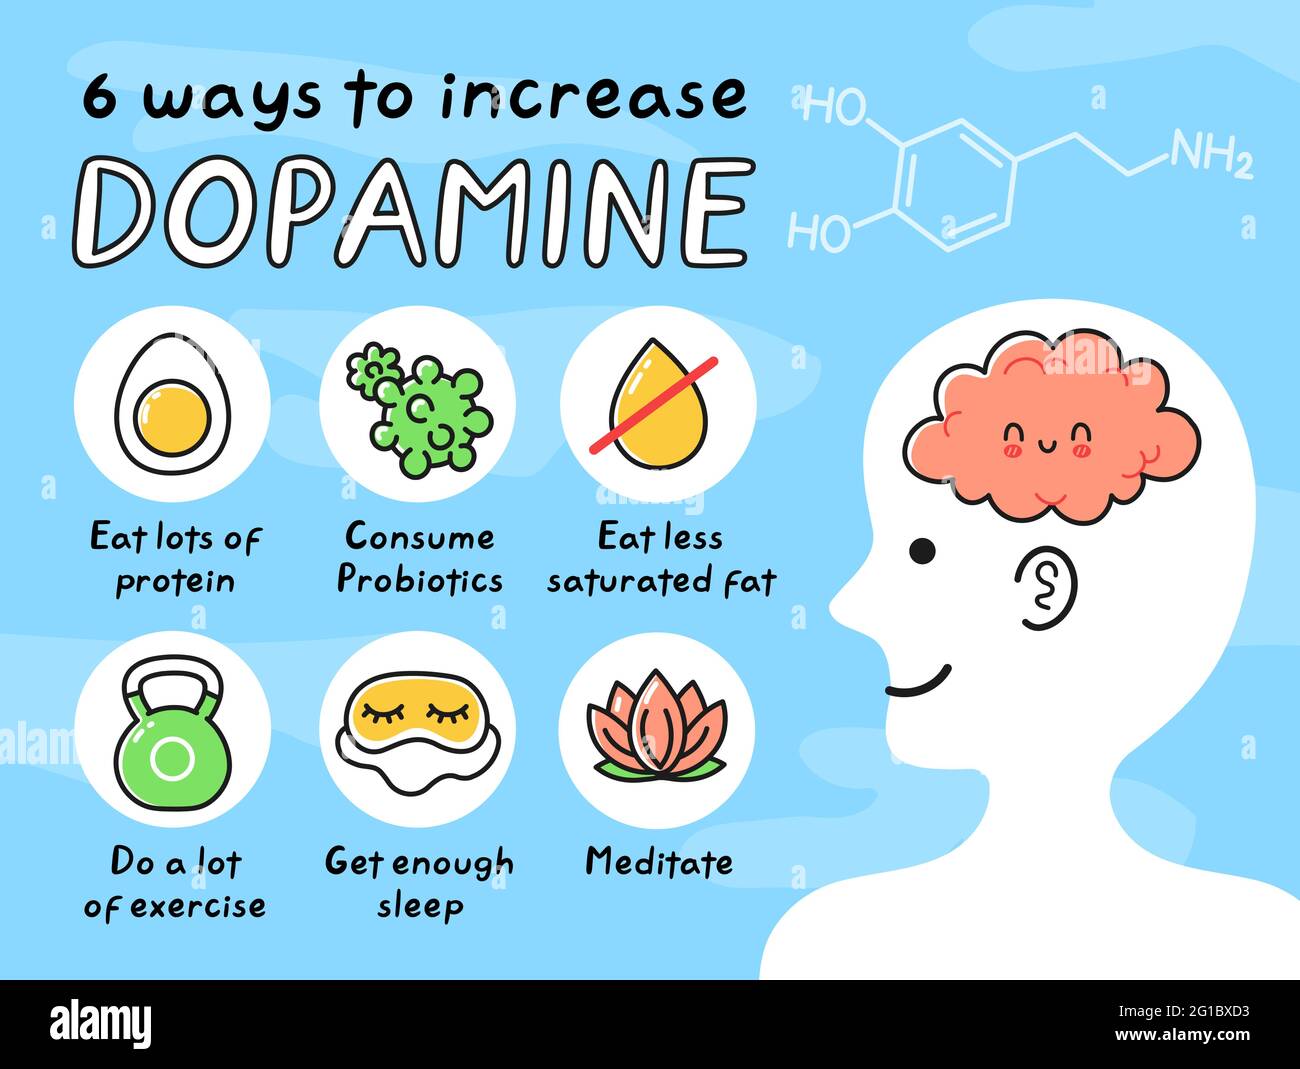 8 ways to increase dopamine infographic. Vector hand drawn cartoon kawaii man person character illustration icon. Brain chemistry, dopamine neurotransmitter hormone cartoon infographic concept Stock Vector